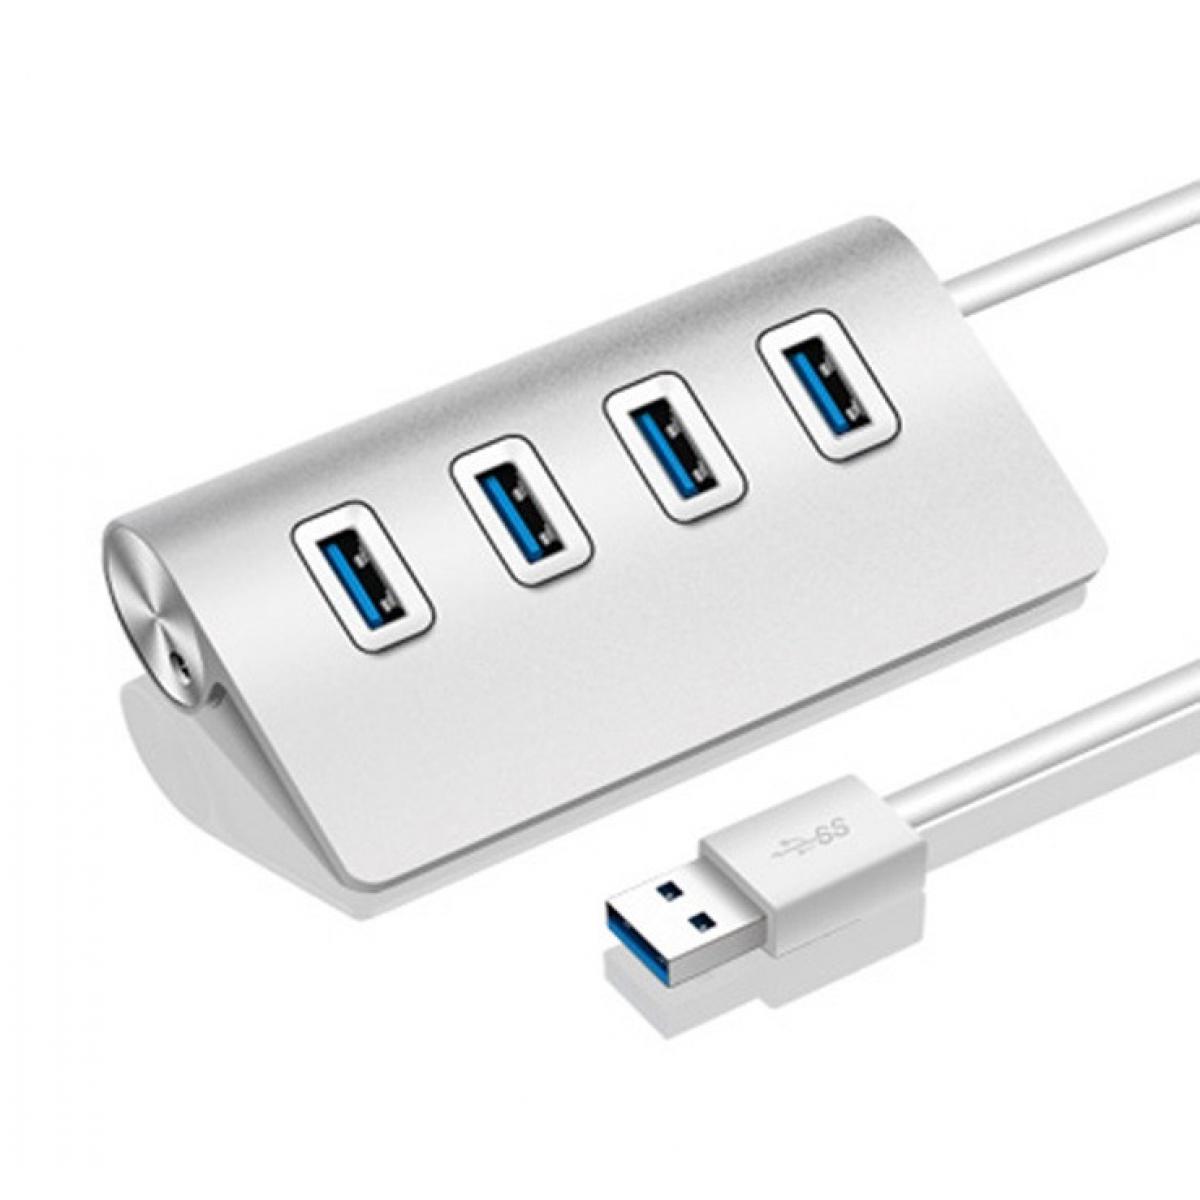 Shot - Hub Metal 4 ports USB 2.0 pour Mac et PC Multi-prises Adaptateur Rallonge (ARGENT) - Hub